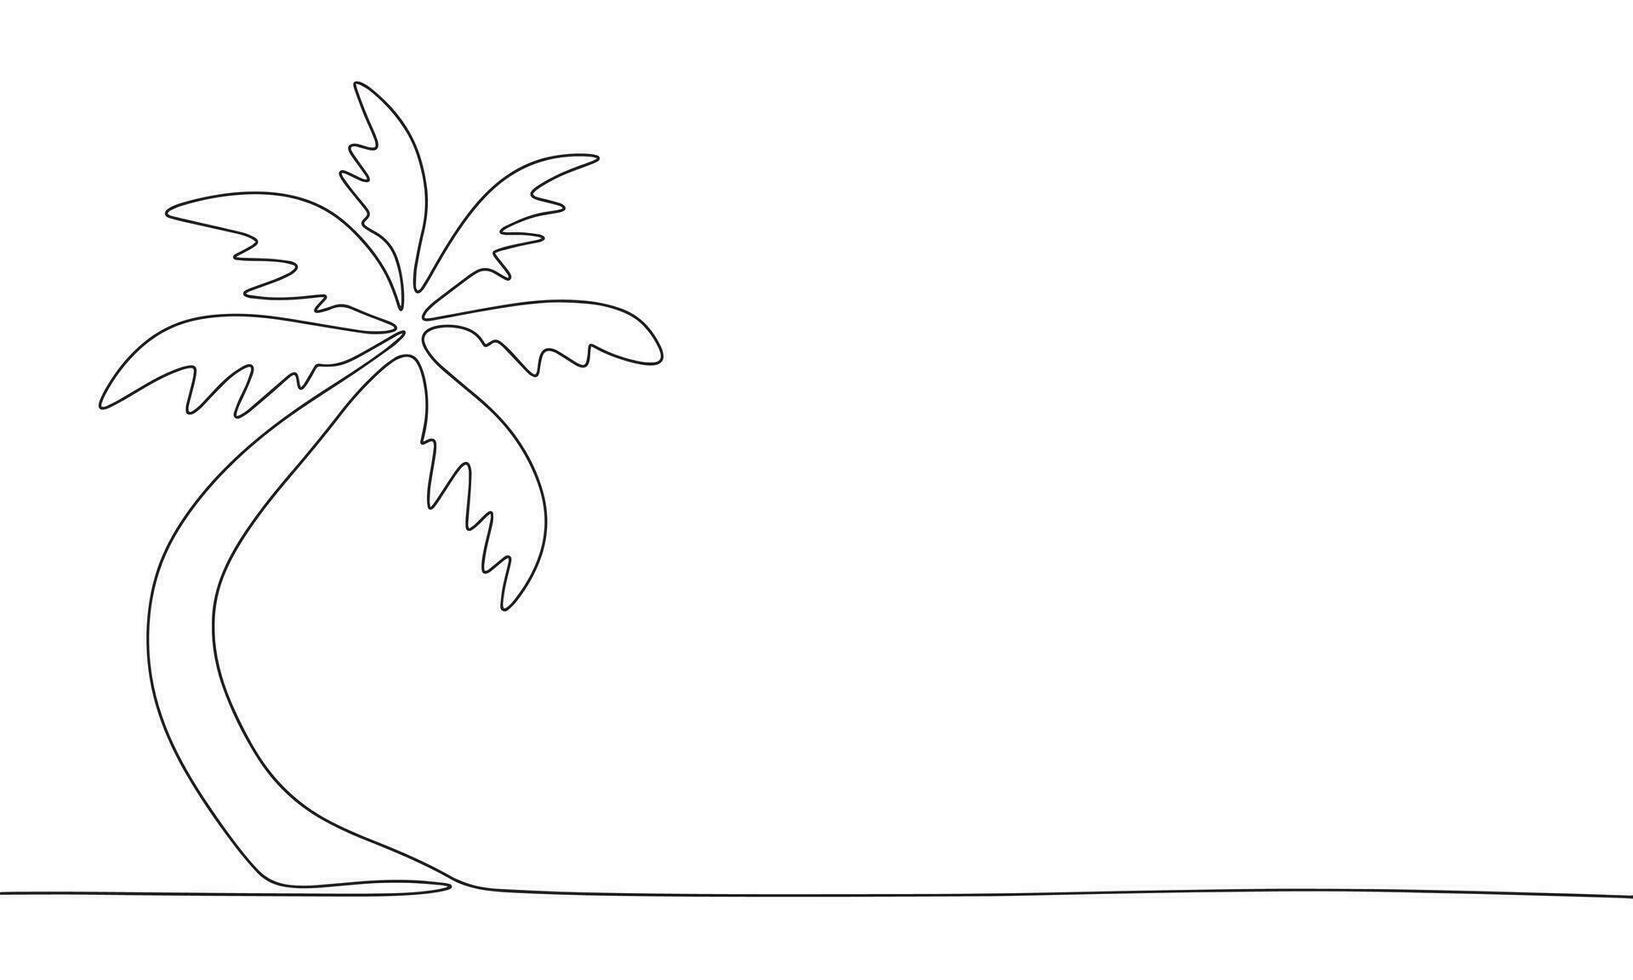 palma árbol silueta vector. uno línea continuo vector línea Arte contorno ilustración. aislado en blanco antecedentes.